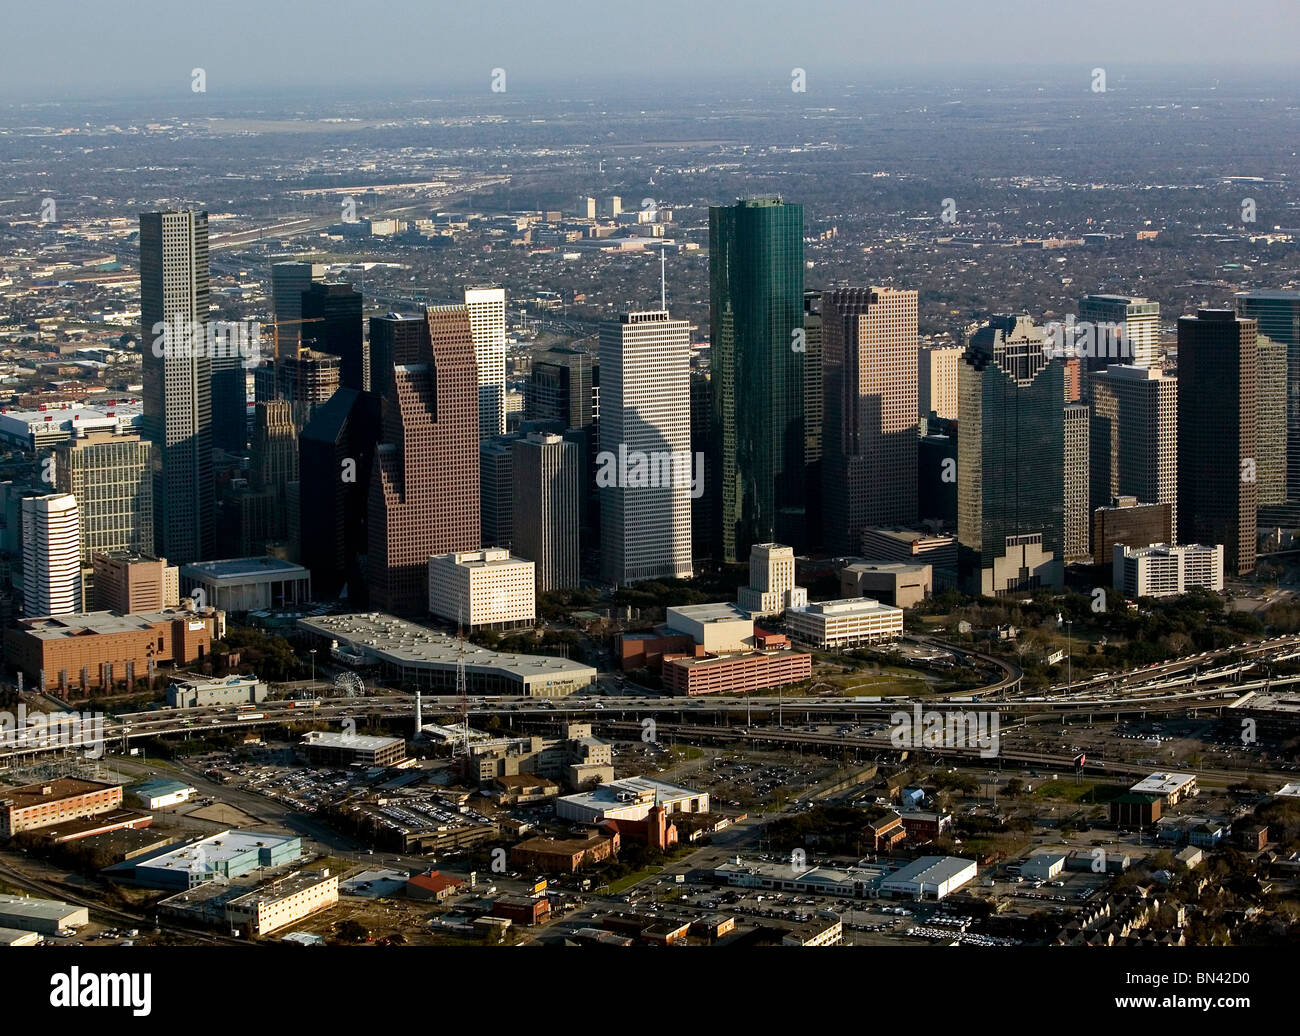 aerial view above downtown Houston Texas Stock Photo - Alamy